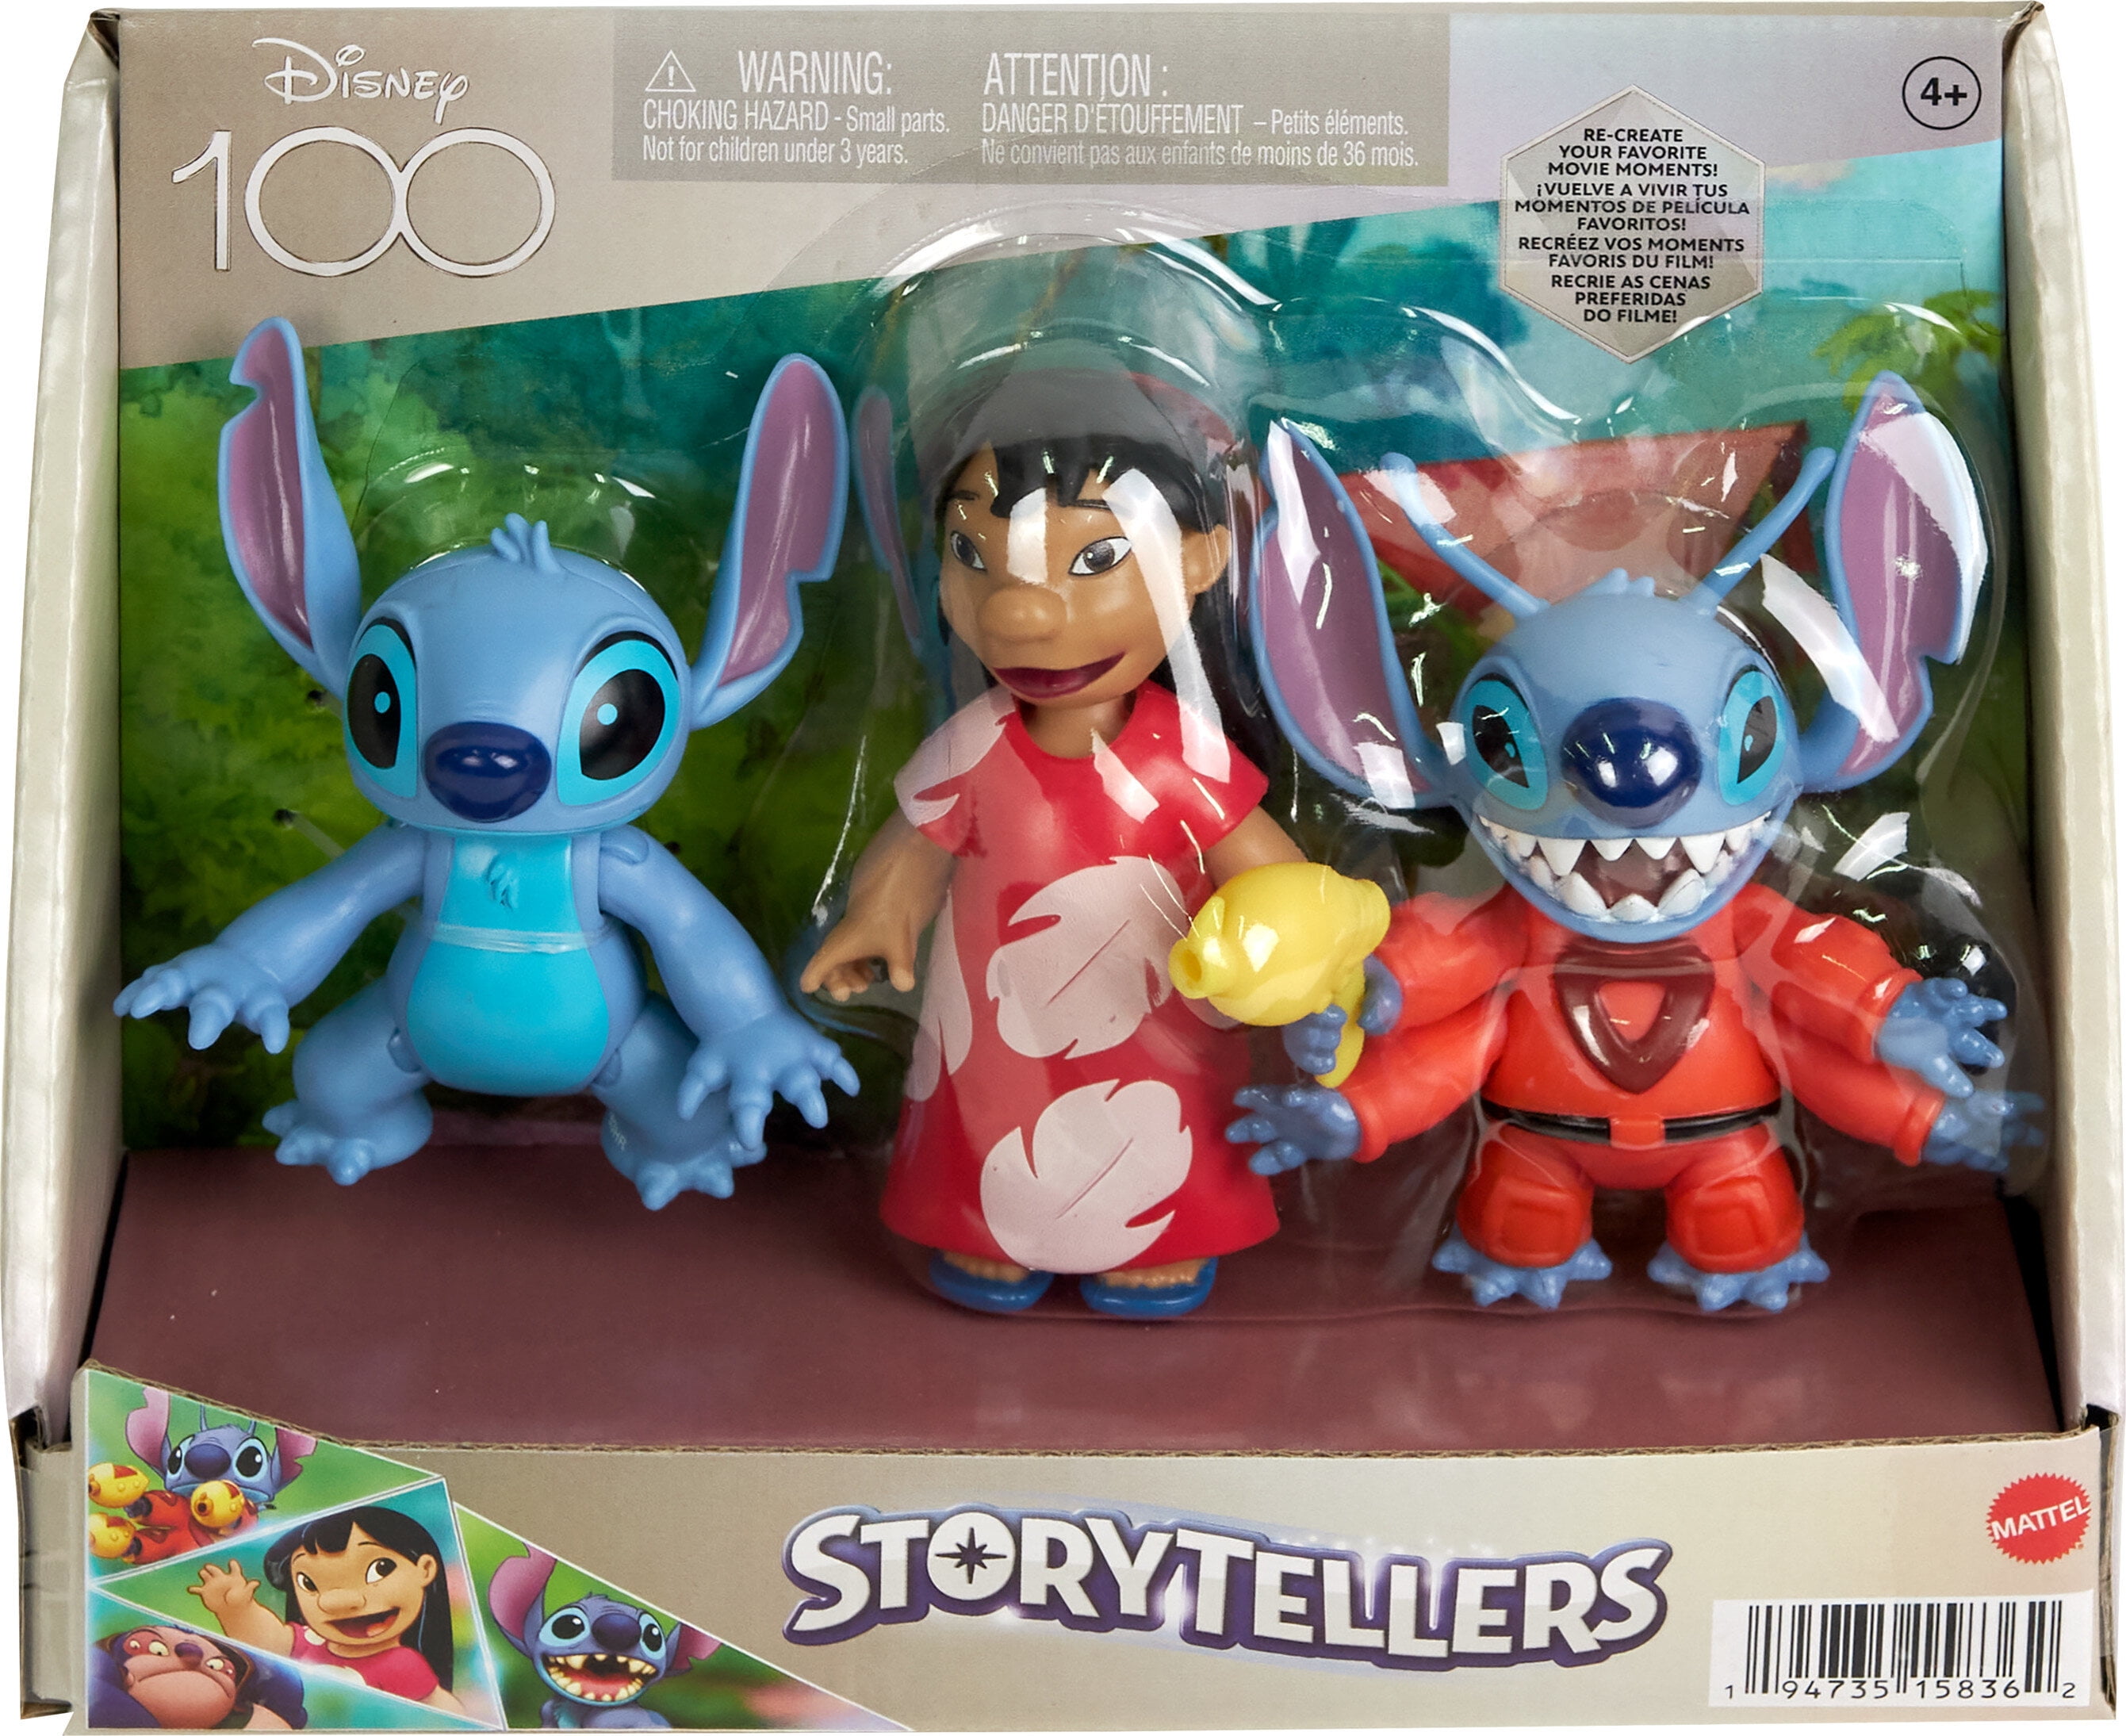 Vintage Disneys Lilo and Stitch Toy Figures 